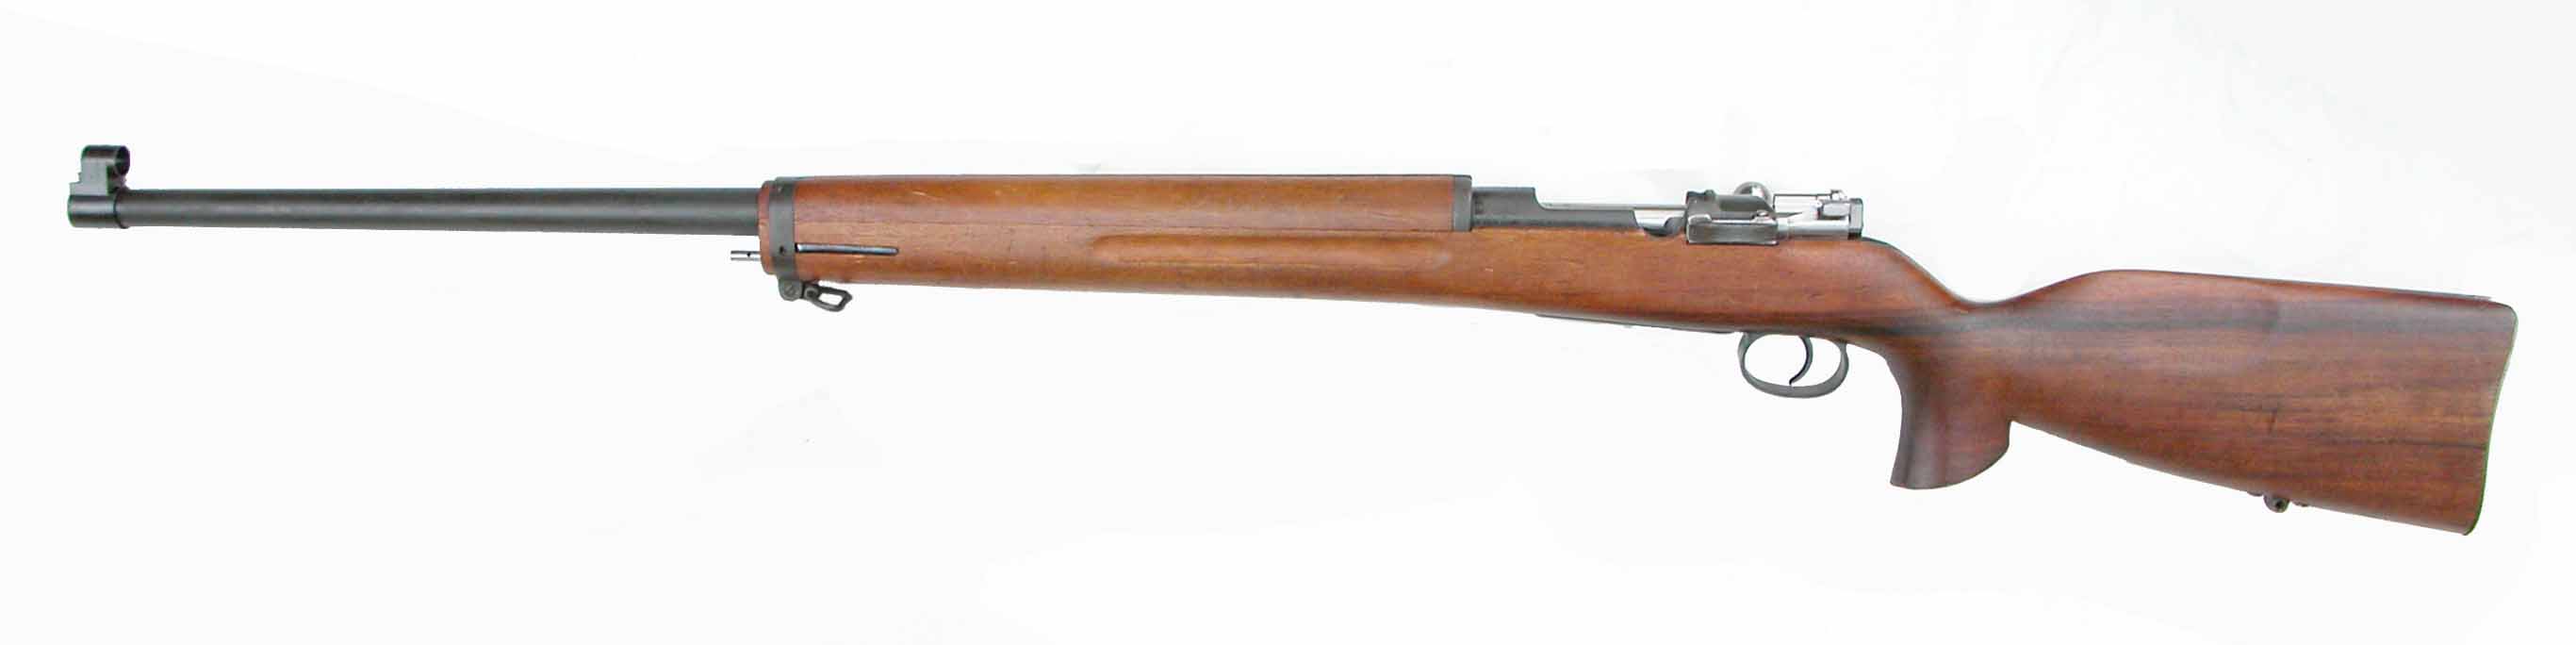 ./guns/rifle/bilder/Rifle-Kongsberg-Mauser-M38-9-2.jpg